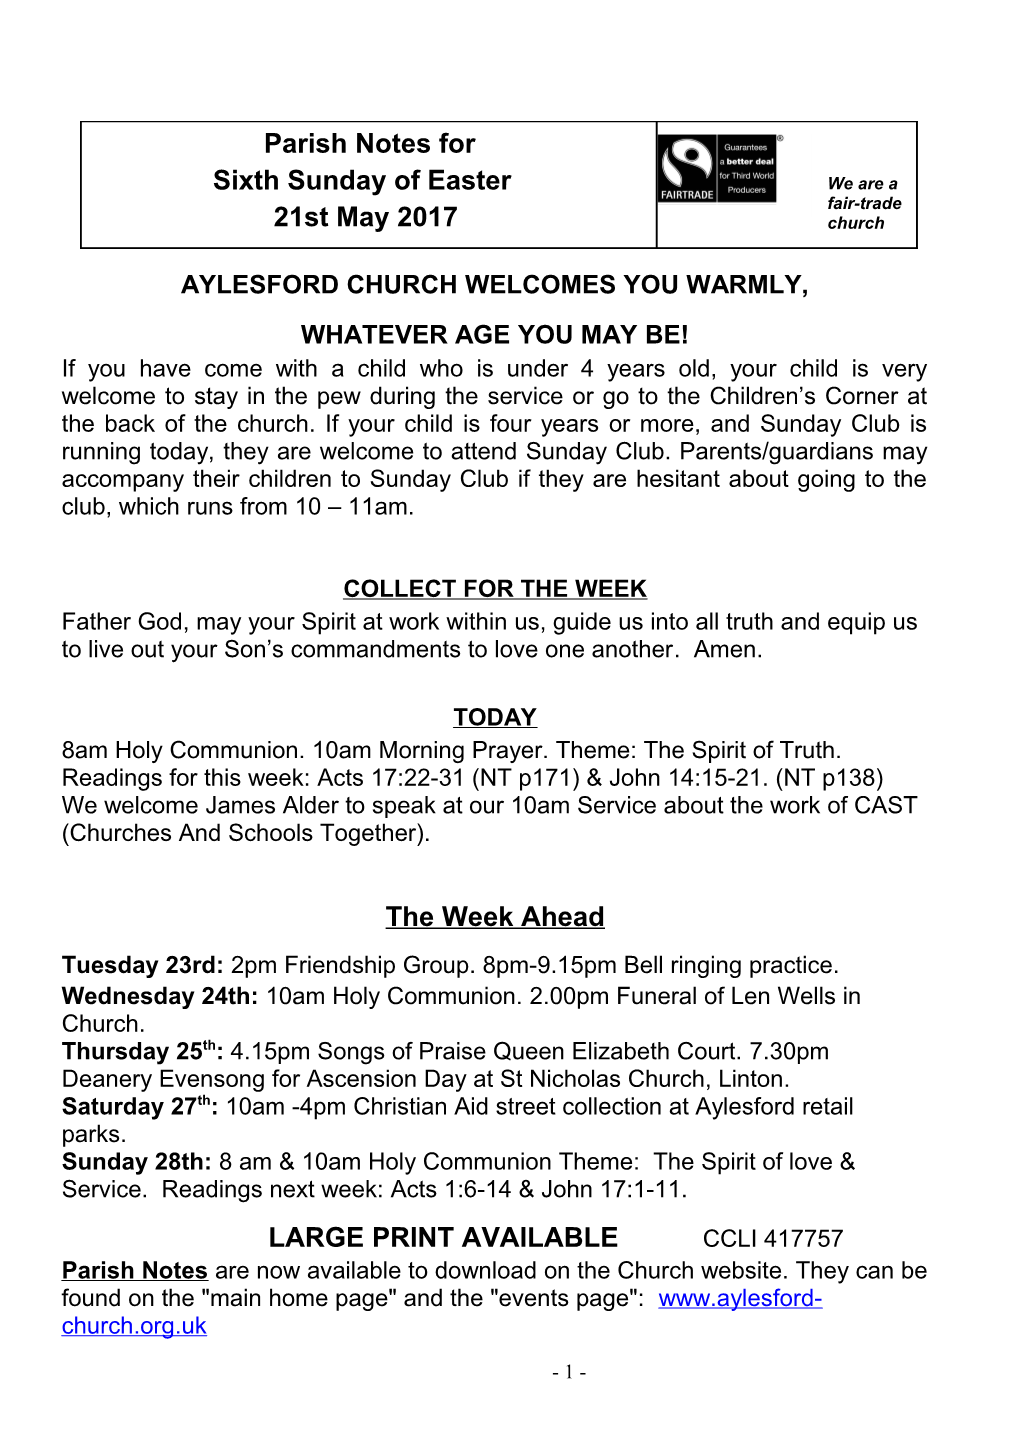 Aylesford Church Parish Notes Template